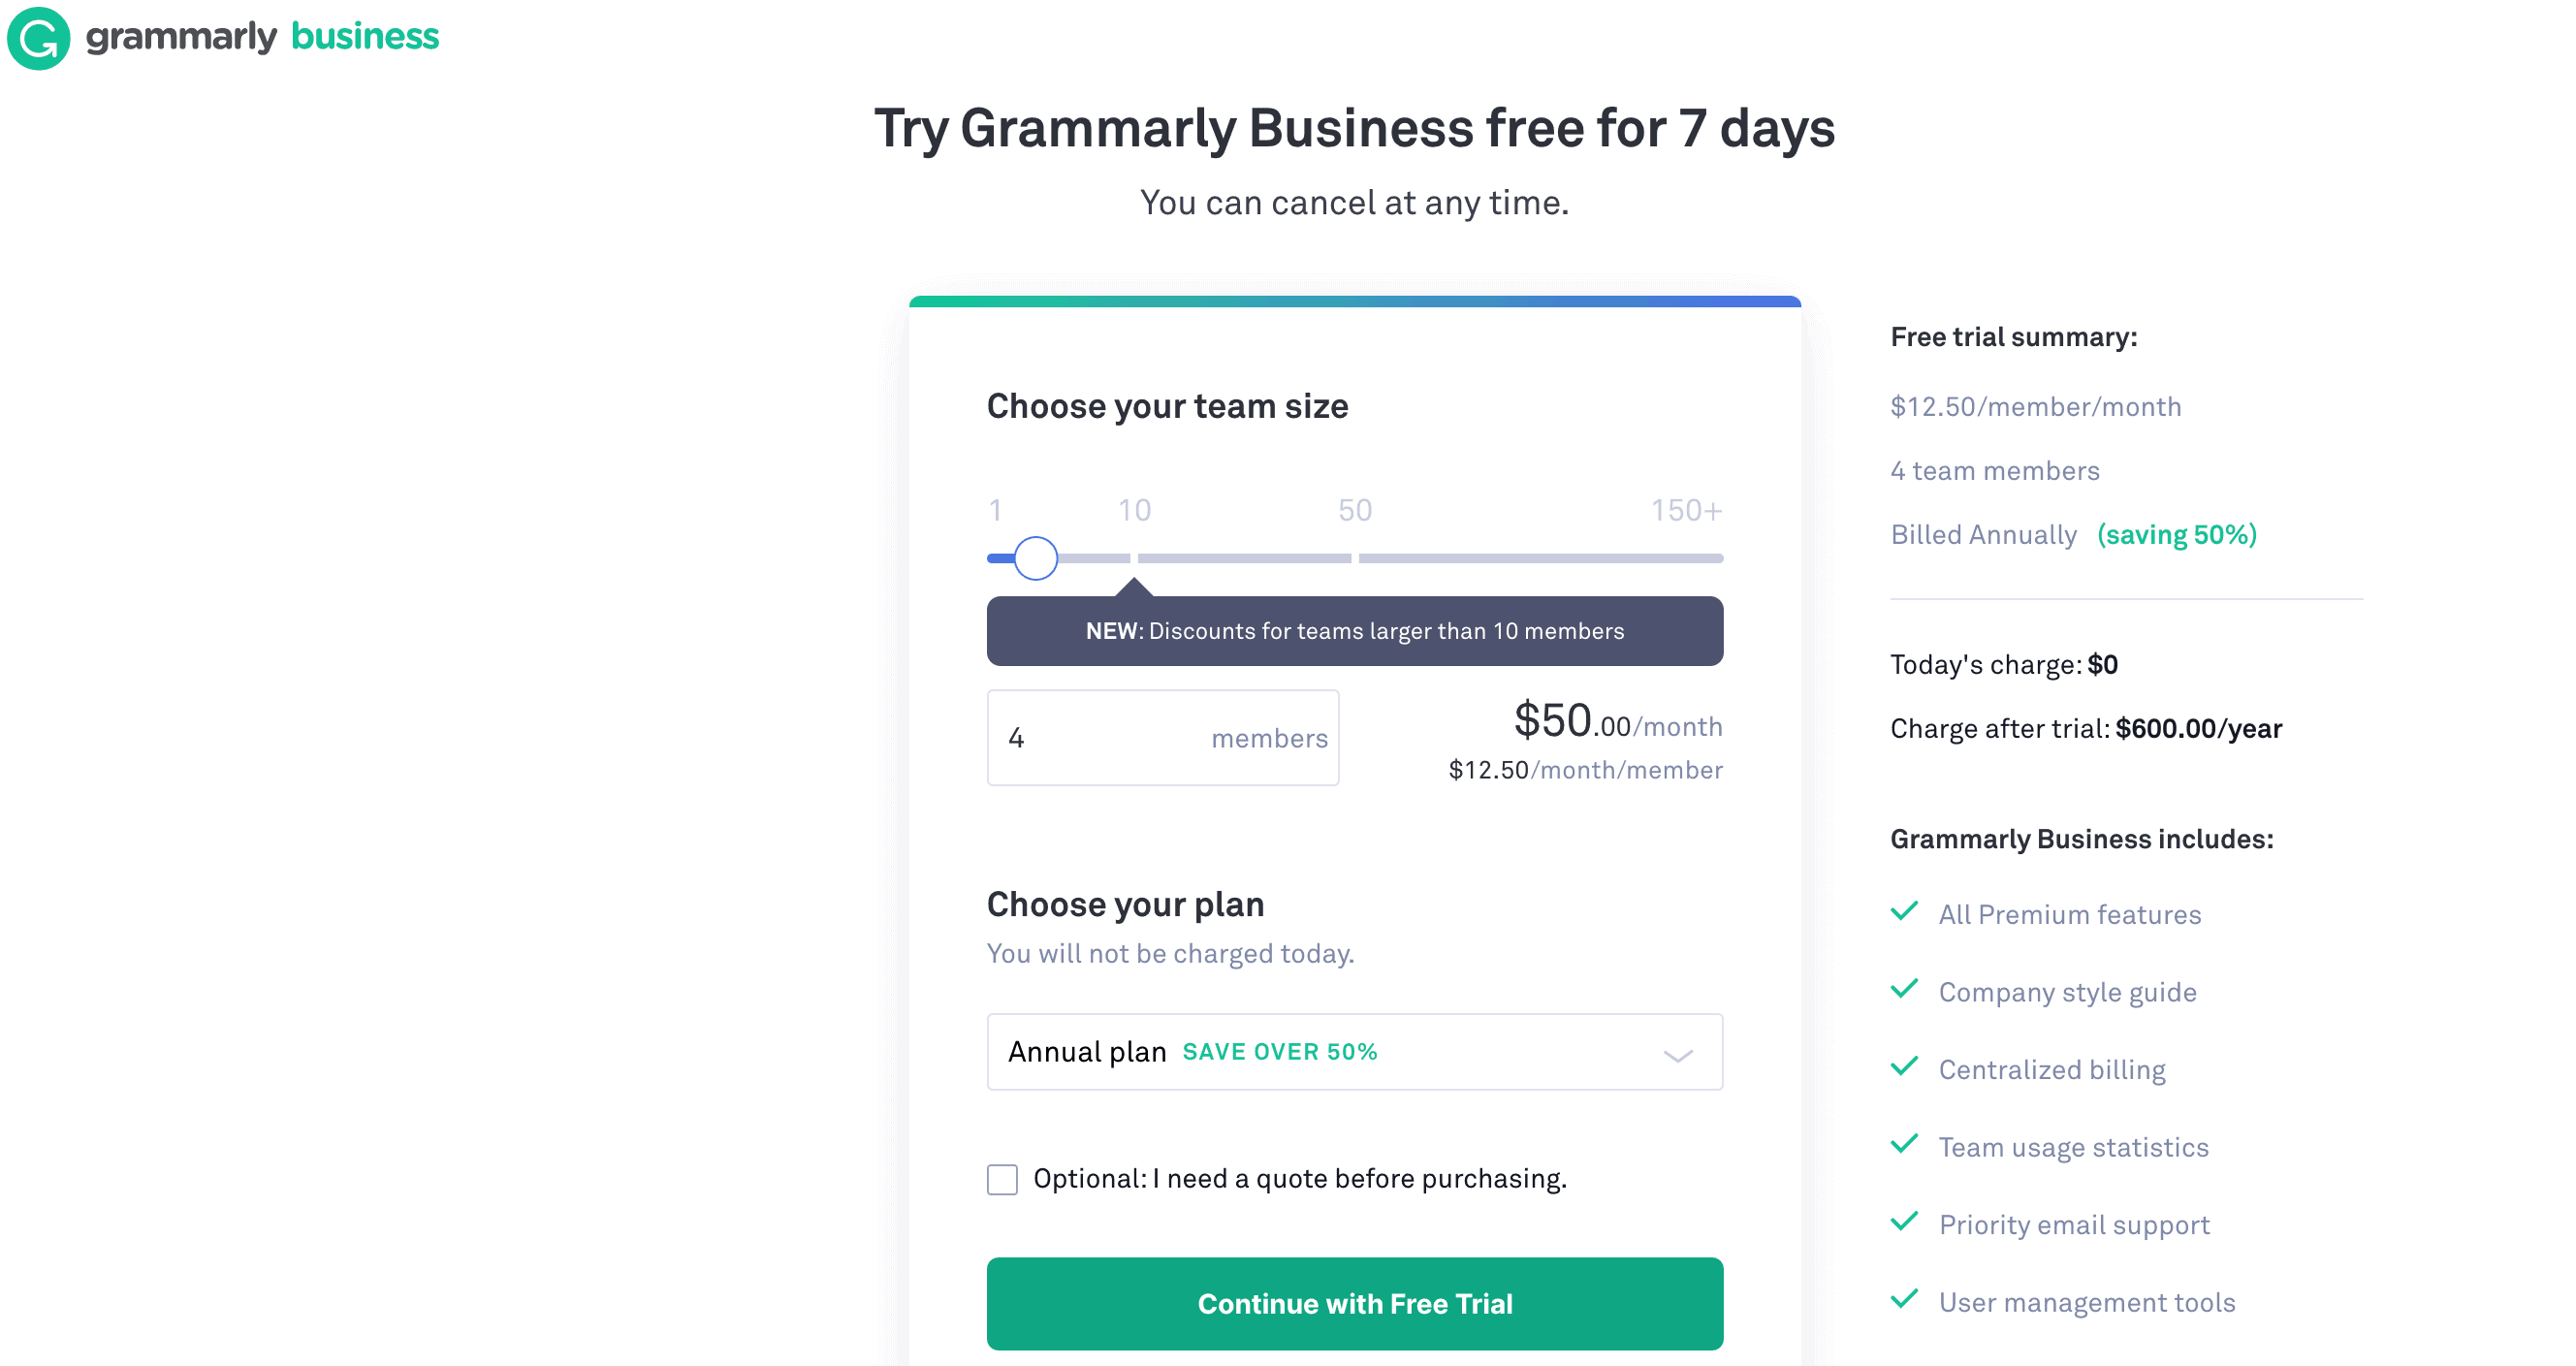 Grammarly Free Trial